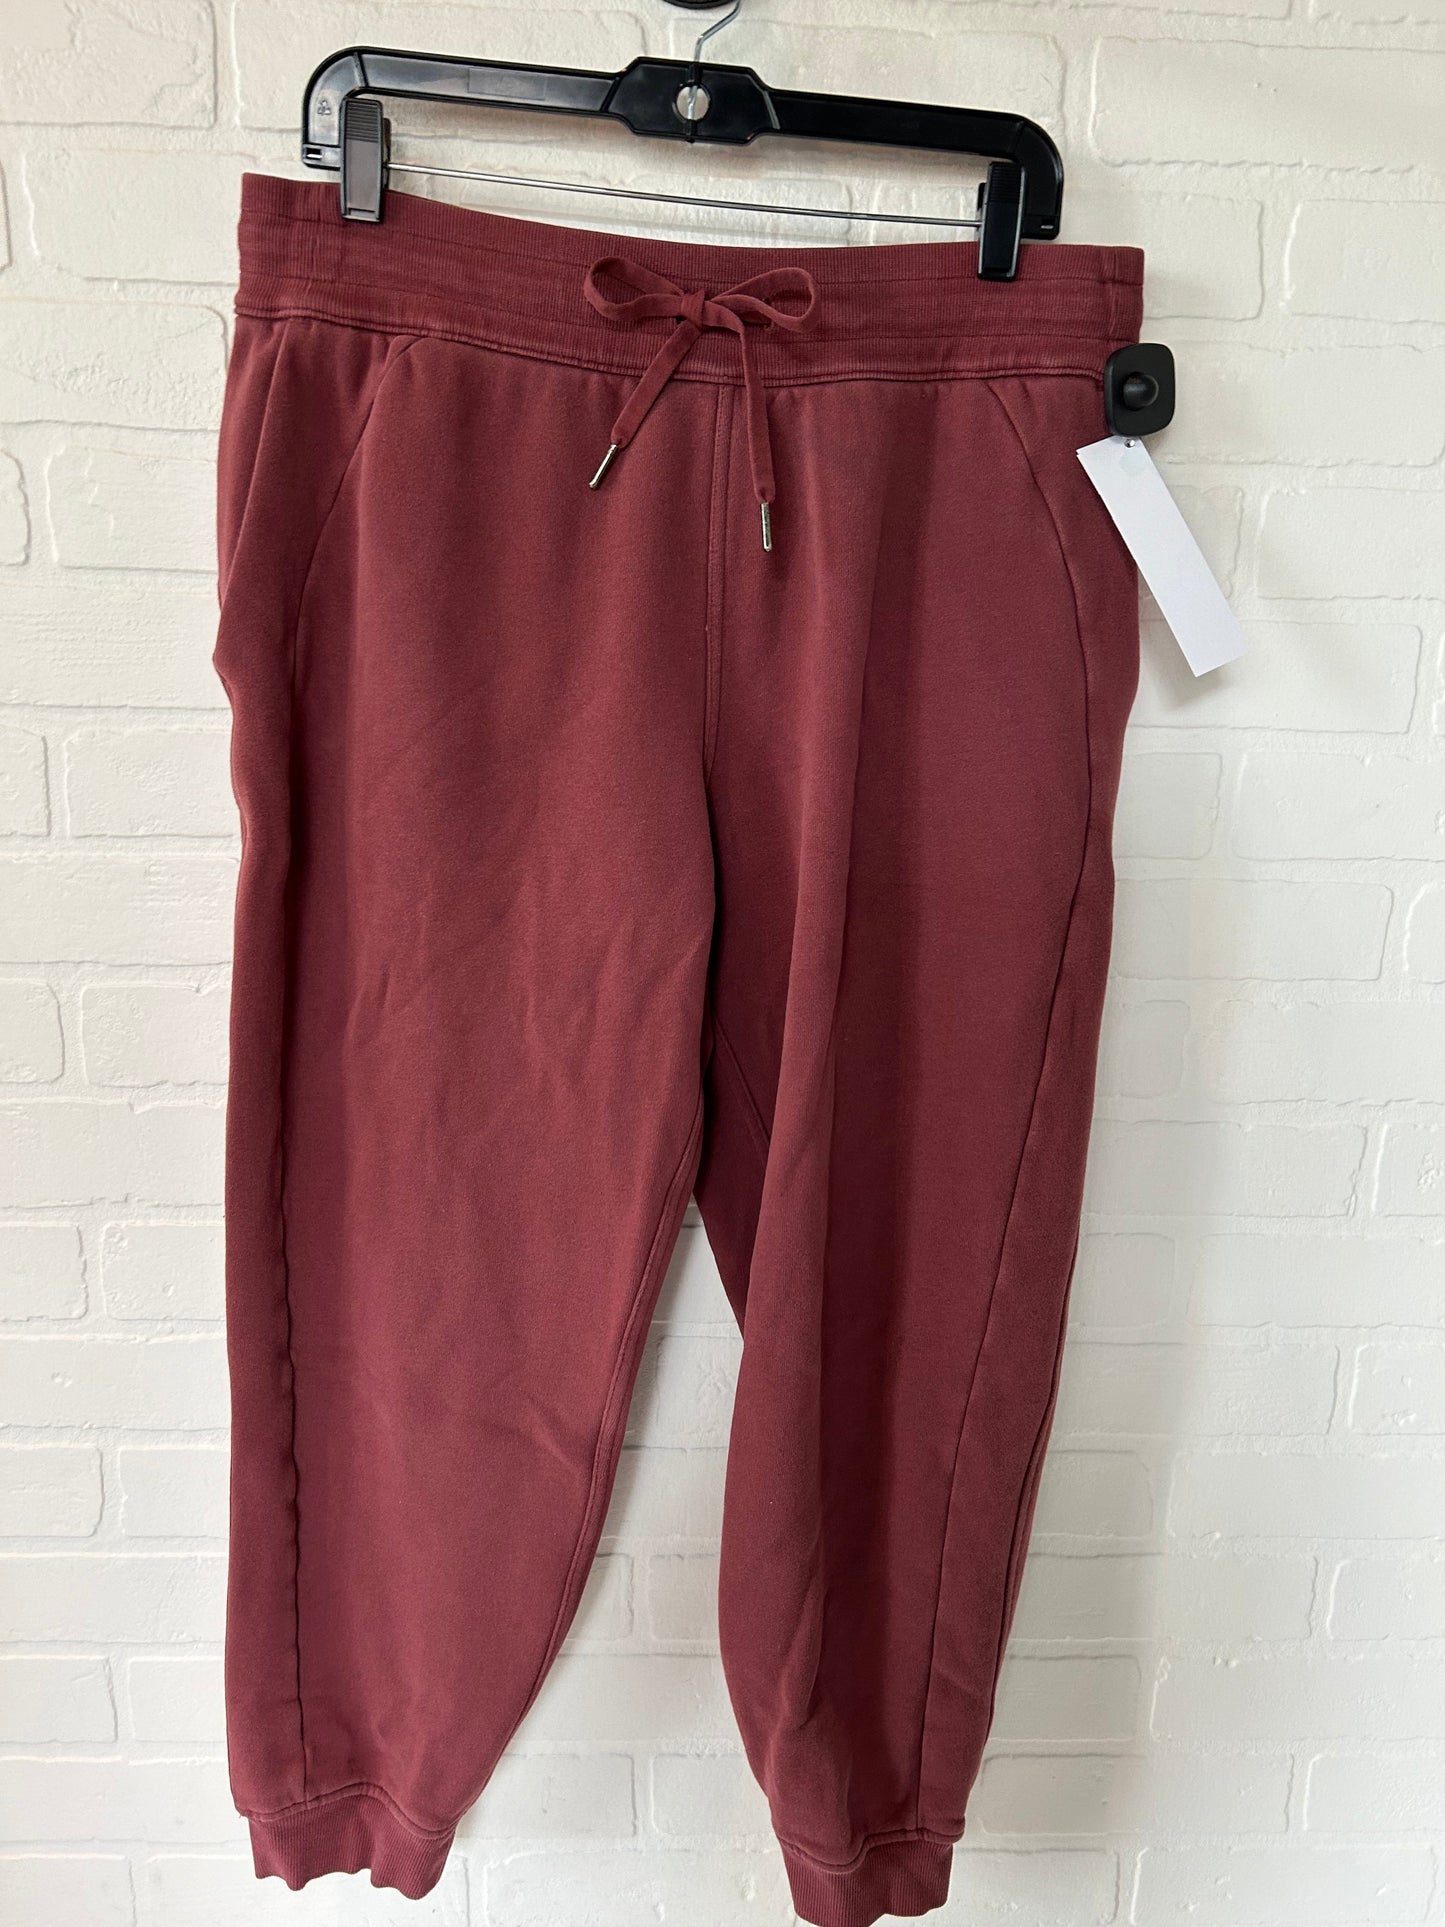 Red Athletic Pants Lululemon, Size 10